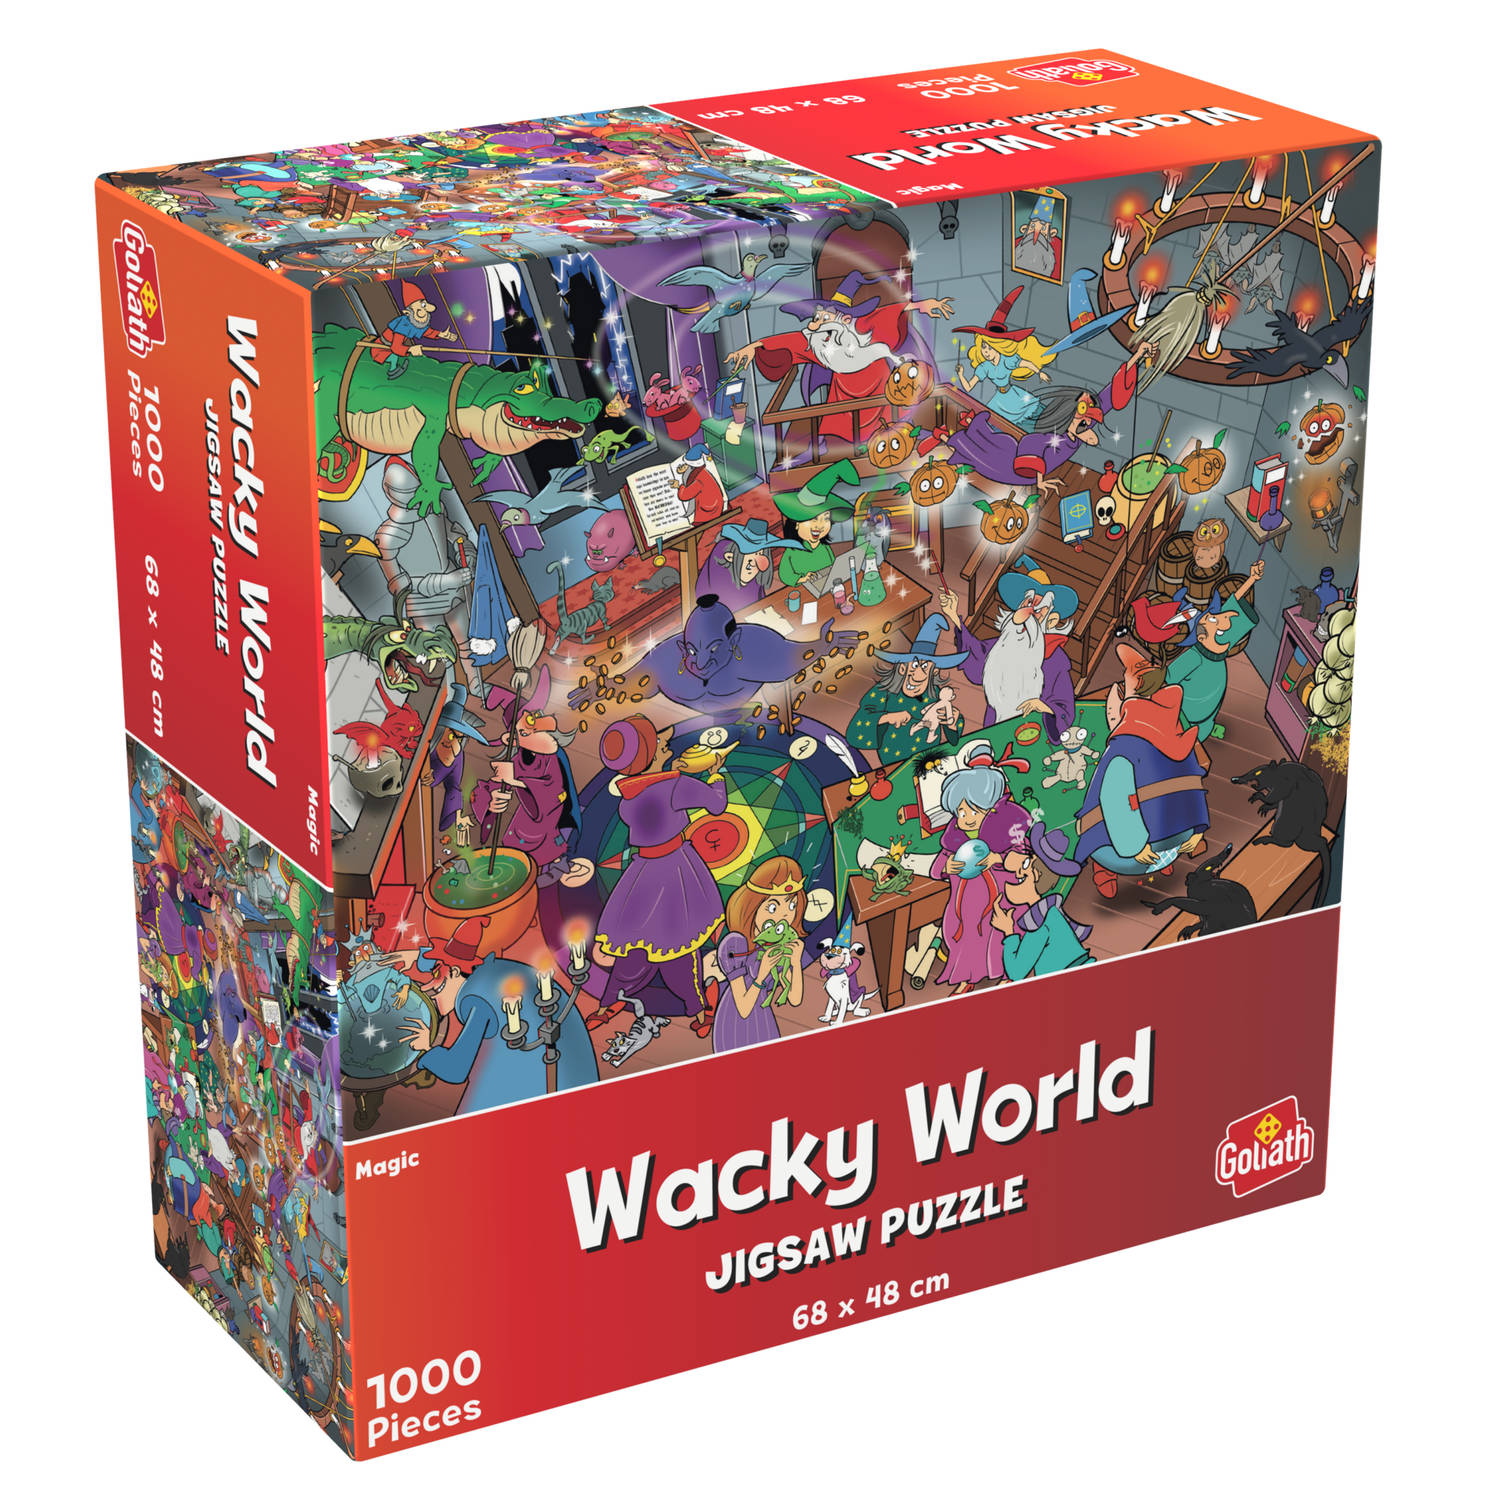 Goliath Wacky World Magic Puzzel 1000 stukjes 68x48cm